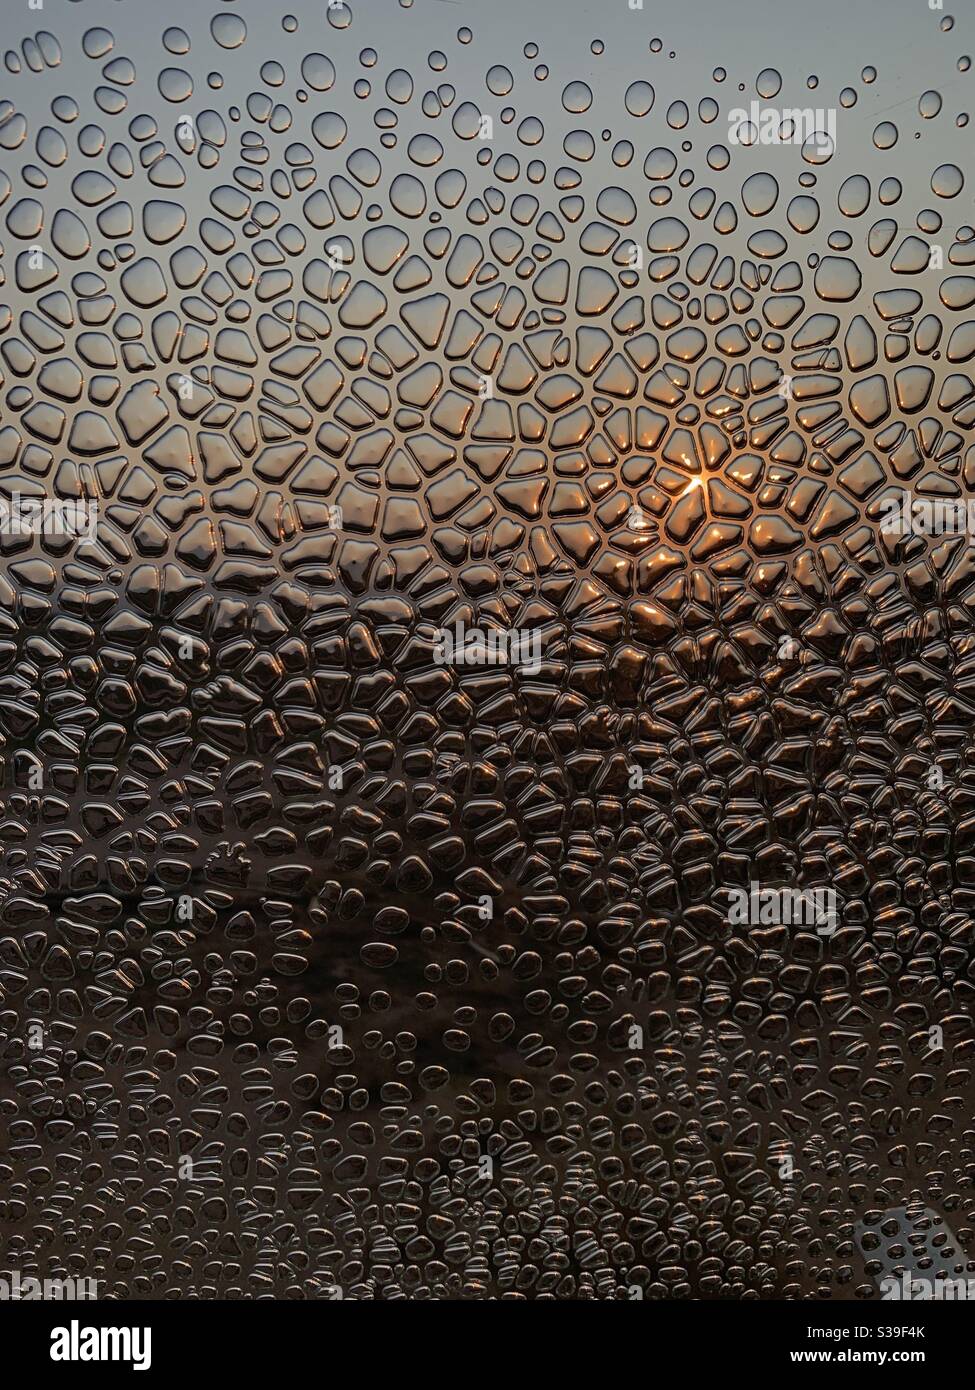 https://c8.alamy.com/comp/S39F4K/sunrise-through-bubble-glass-of-a-tanker-plane-window-S39F4K.jpg